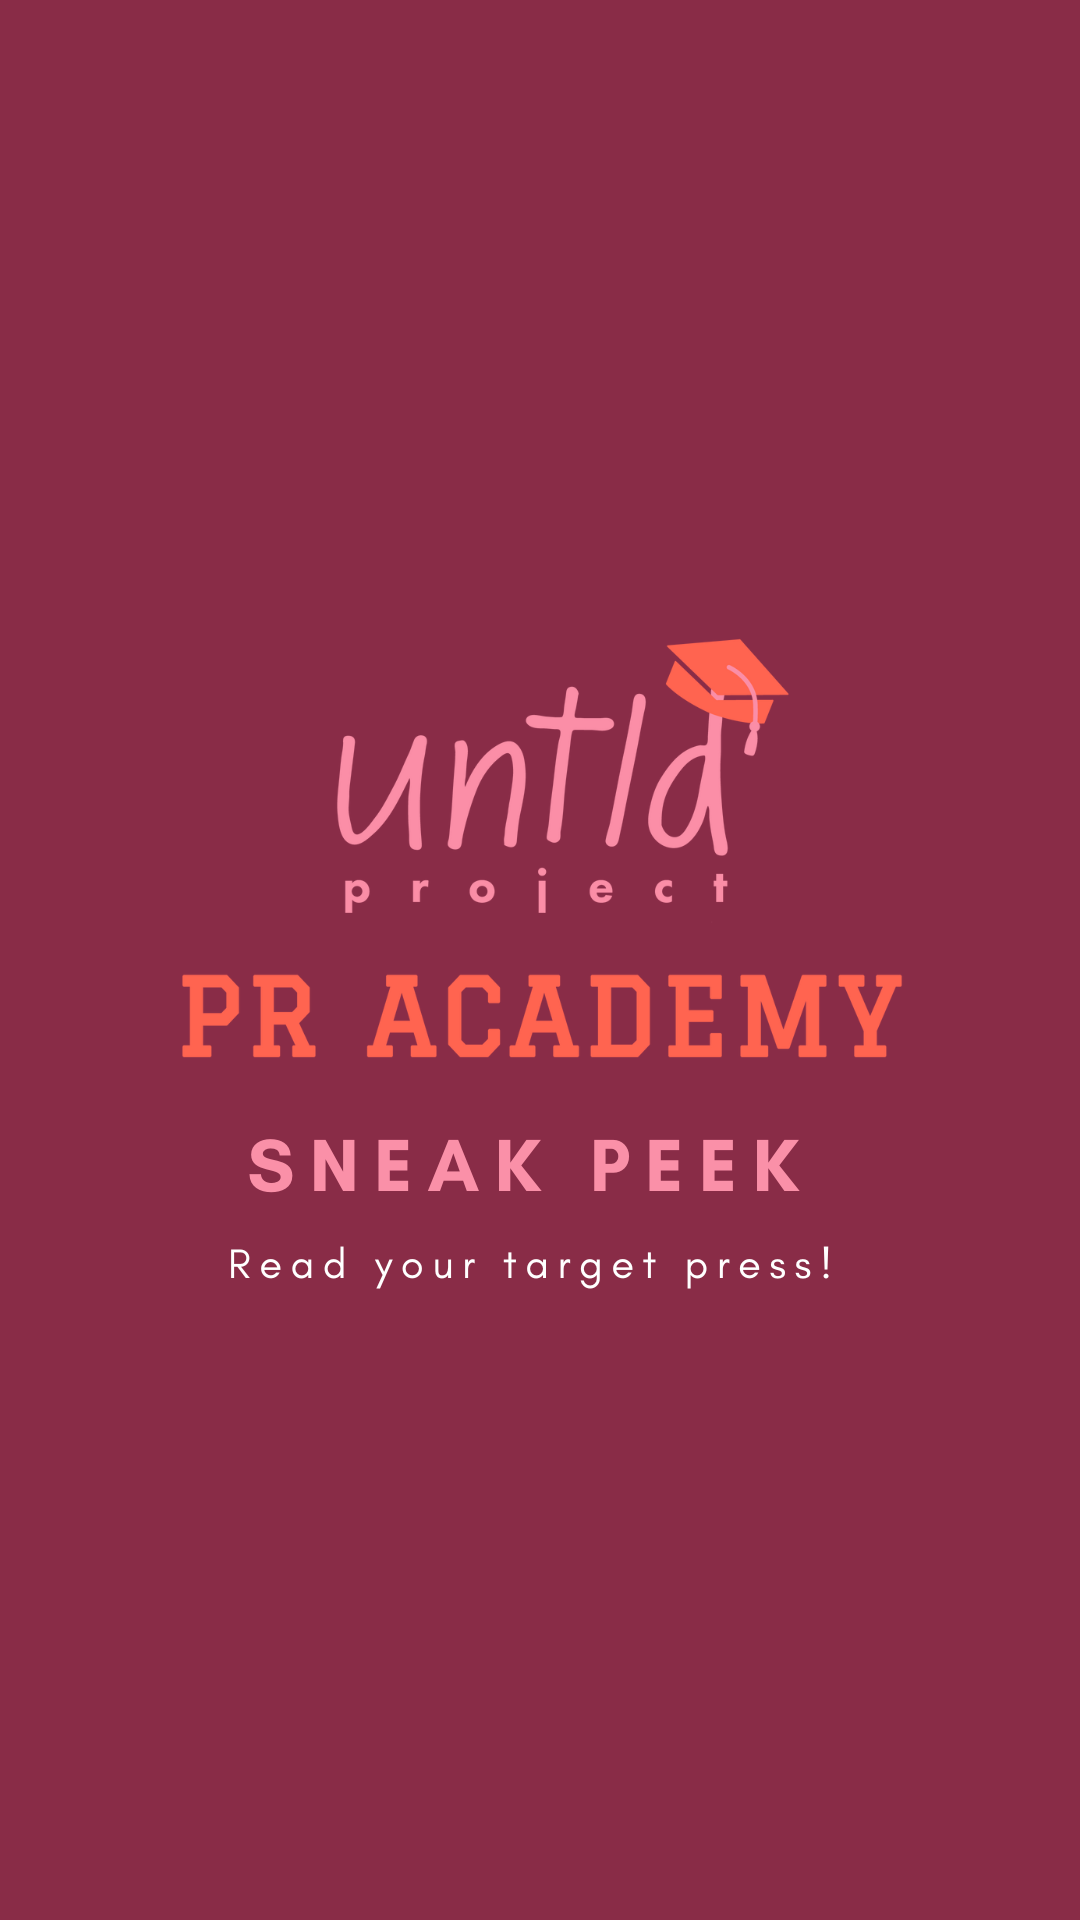 PR Academy target press.png